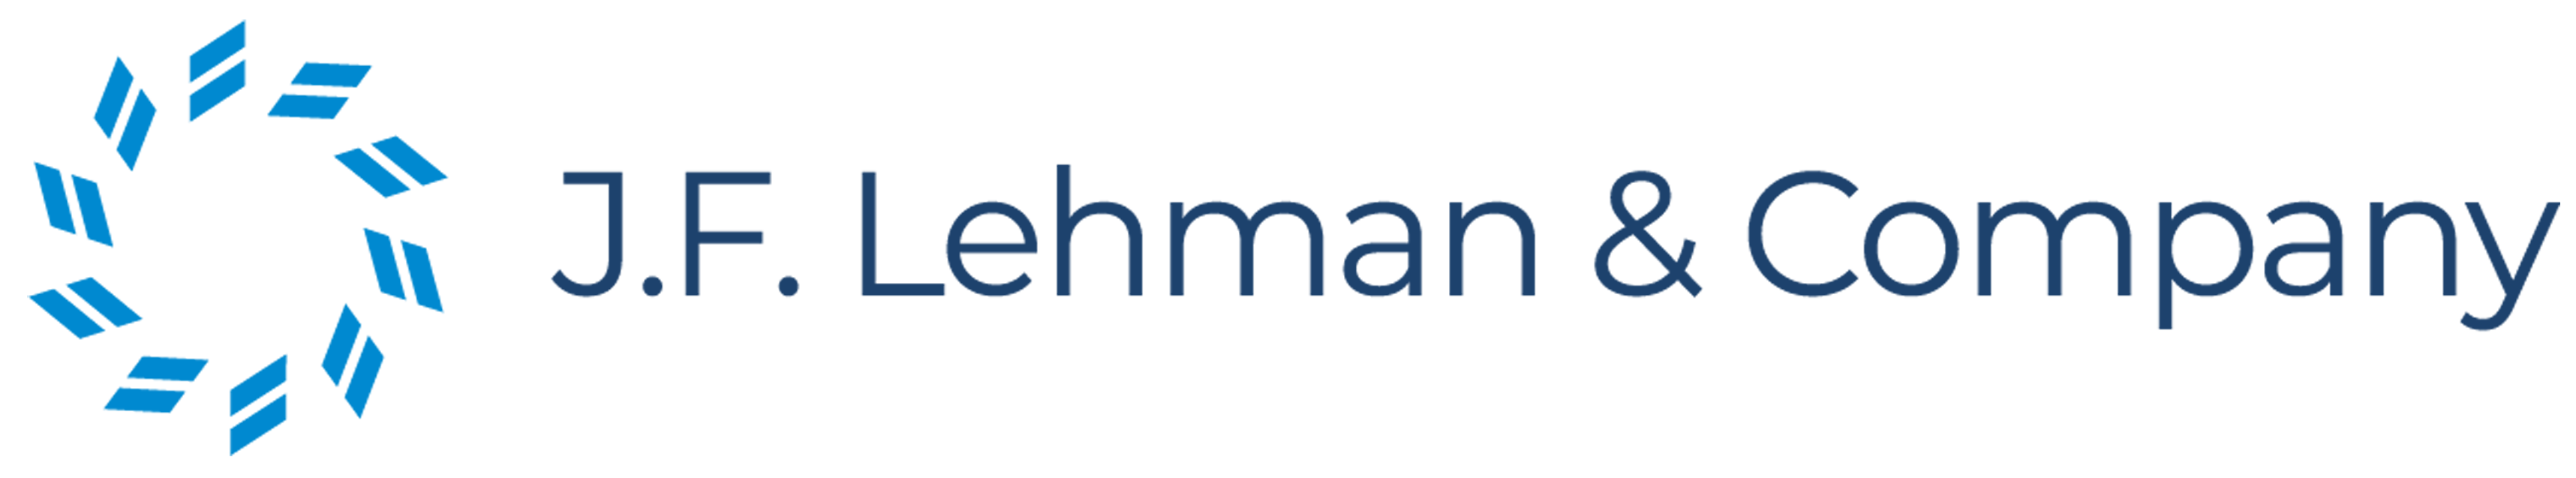 J.F. Lehman & Company Announces Promotions, January 15 2014